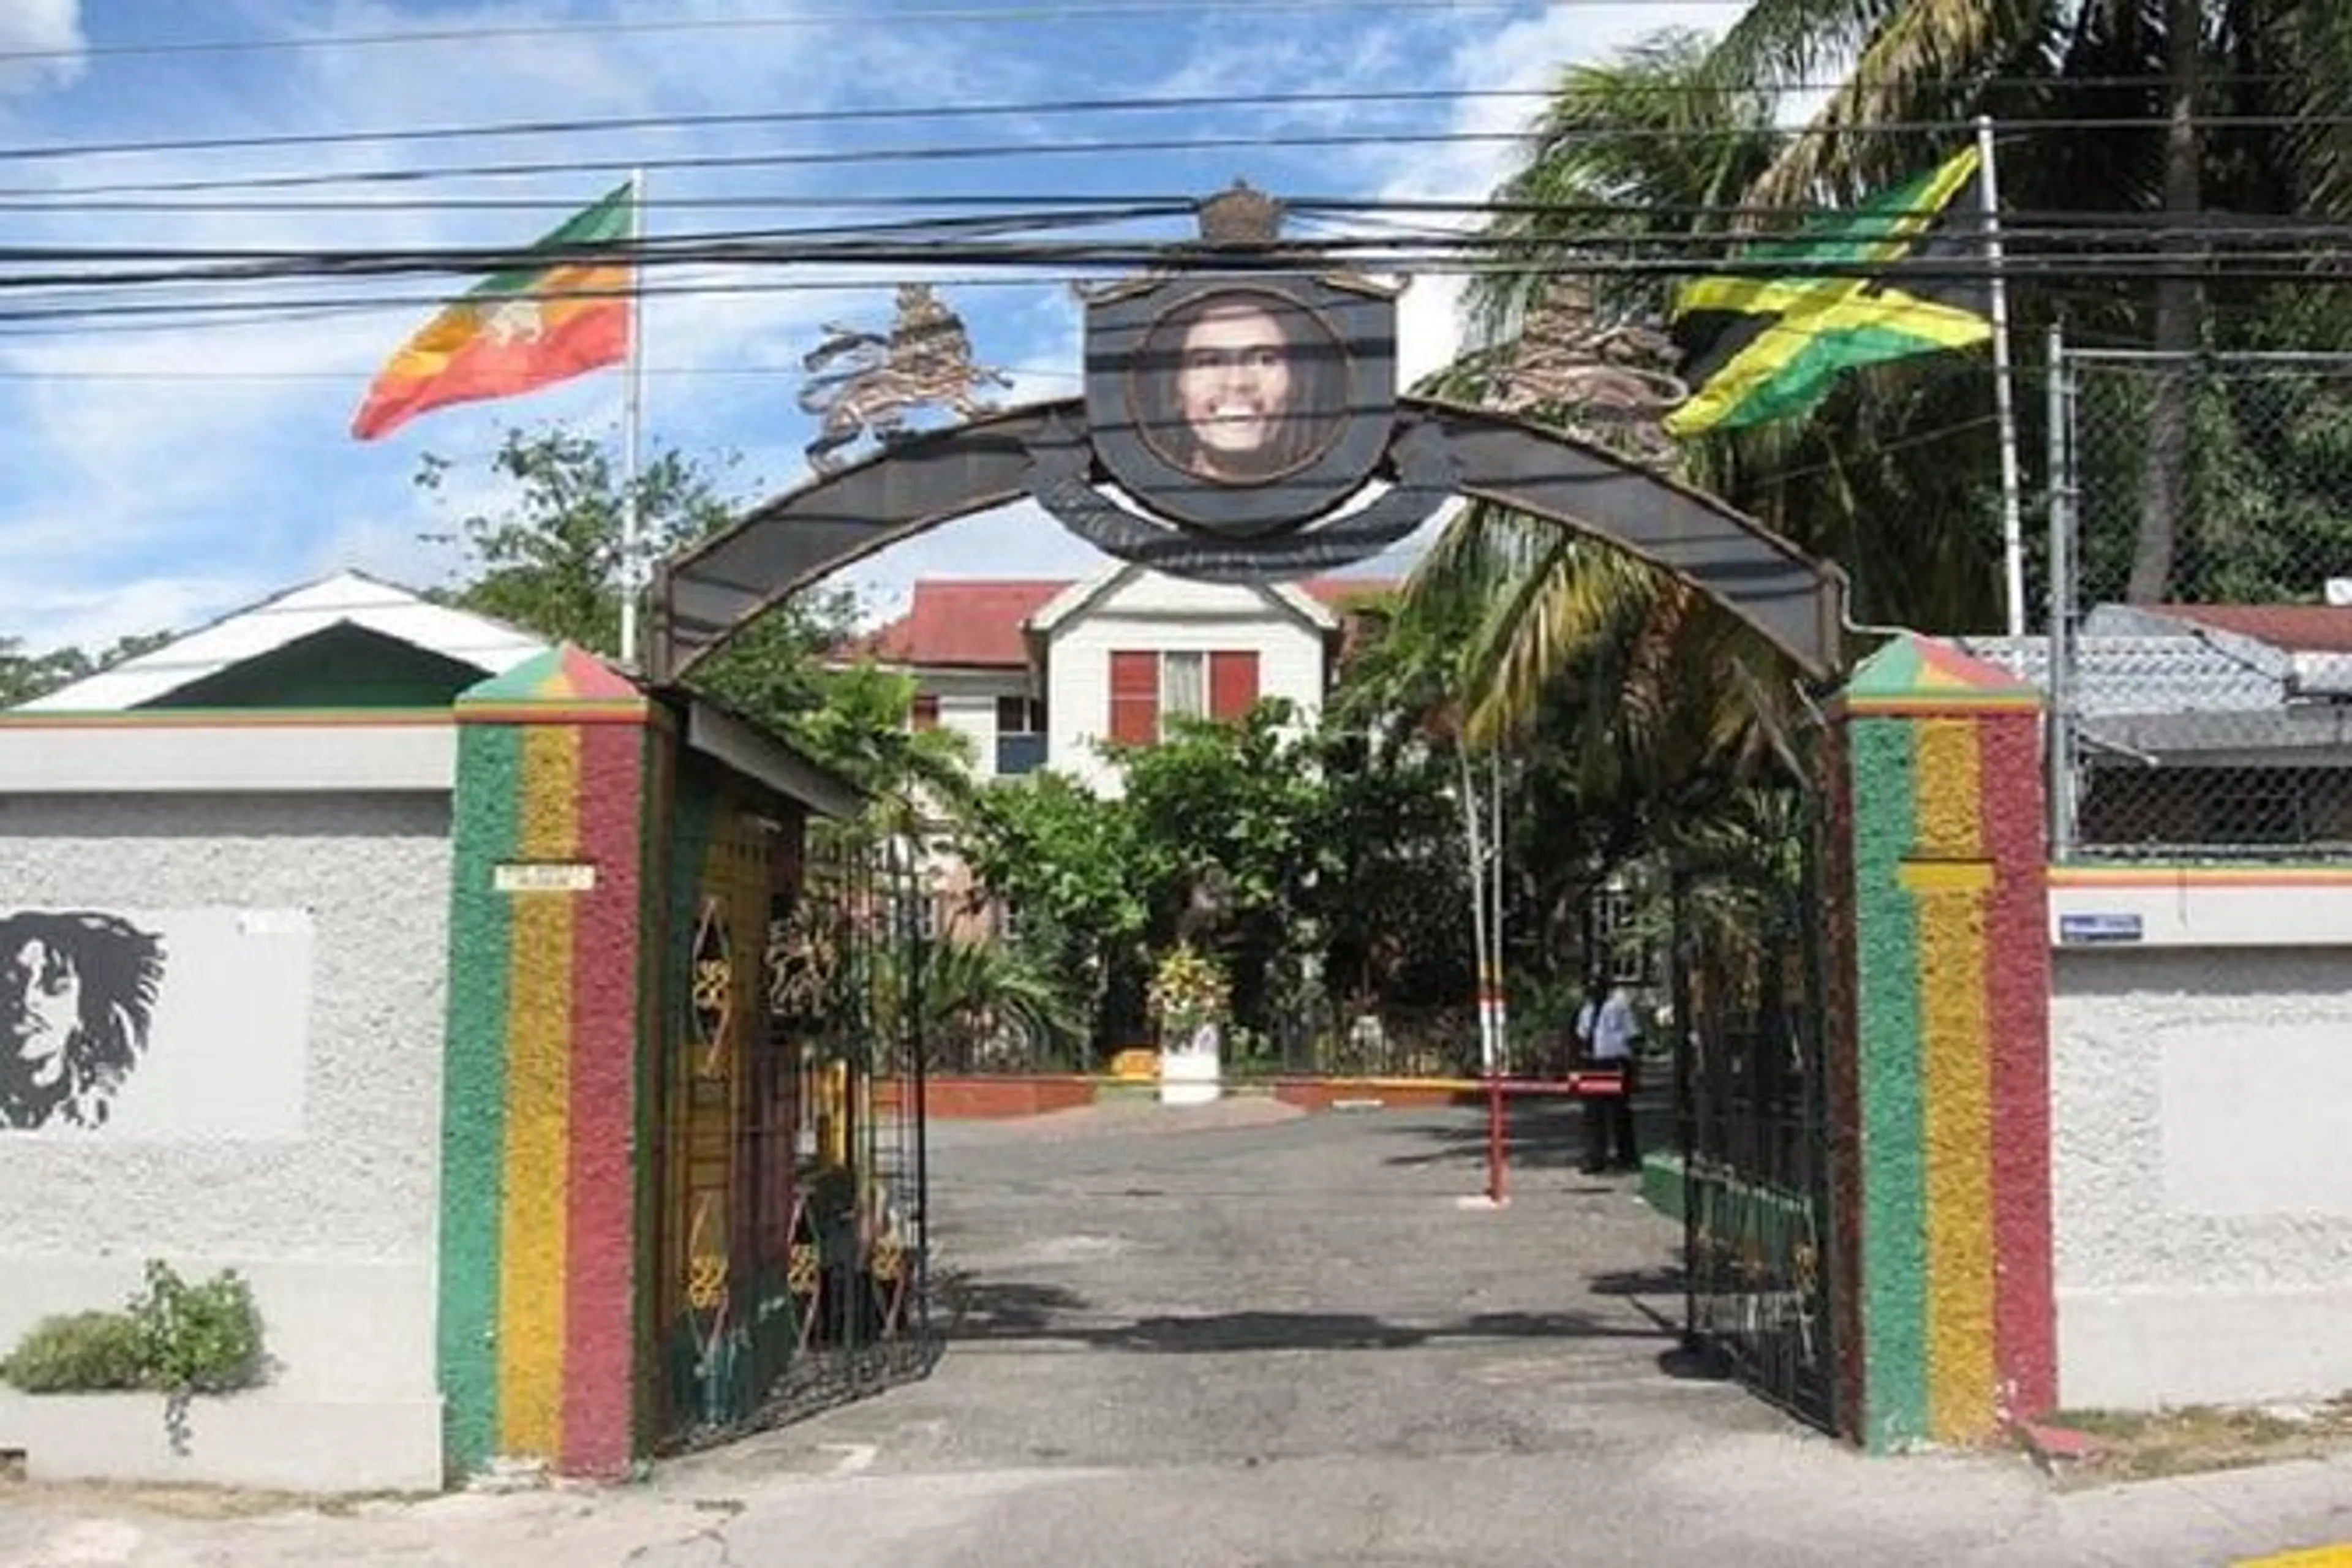 Bob Marley Museum